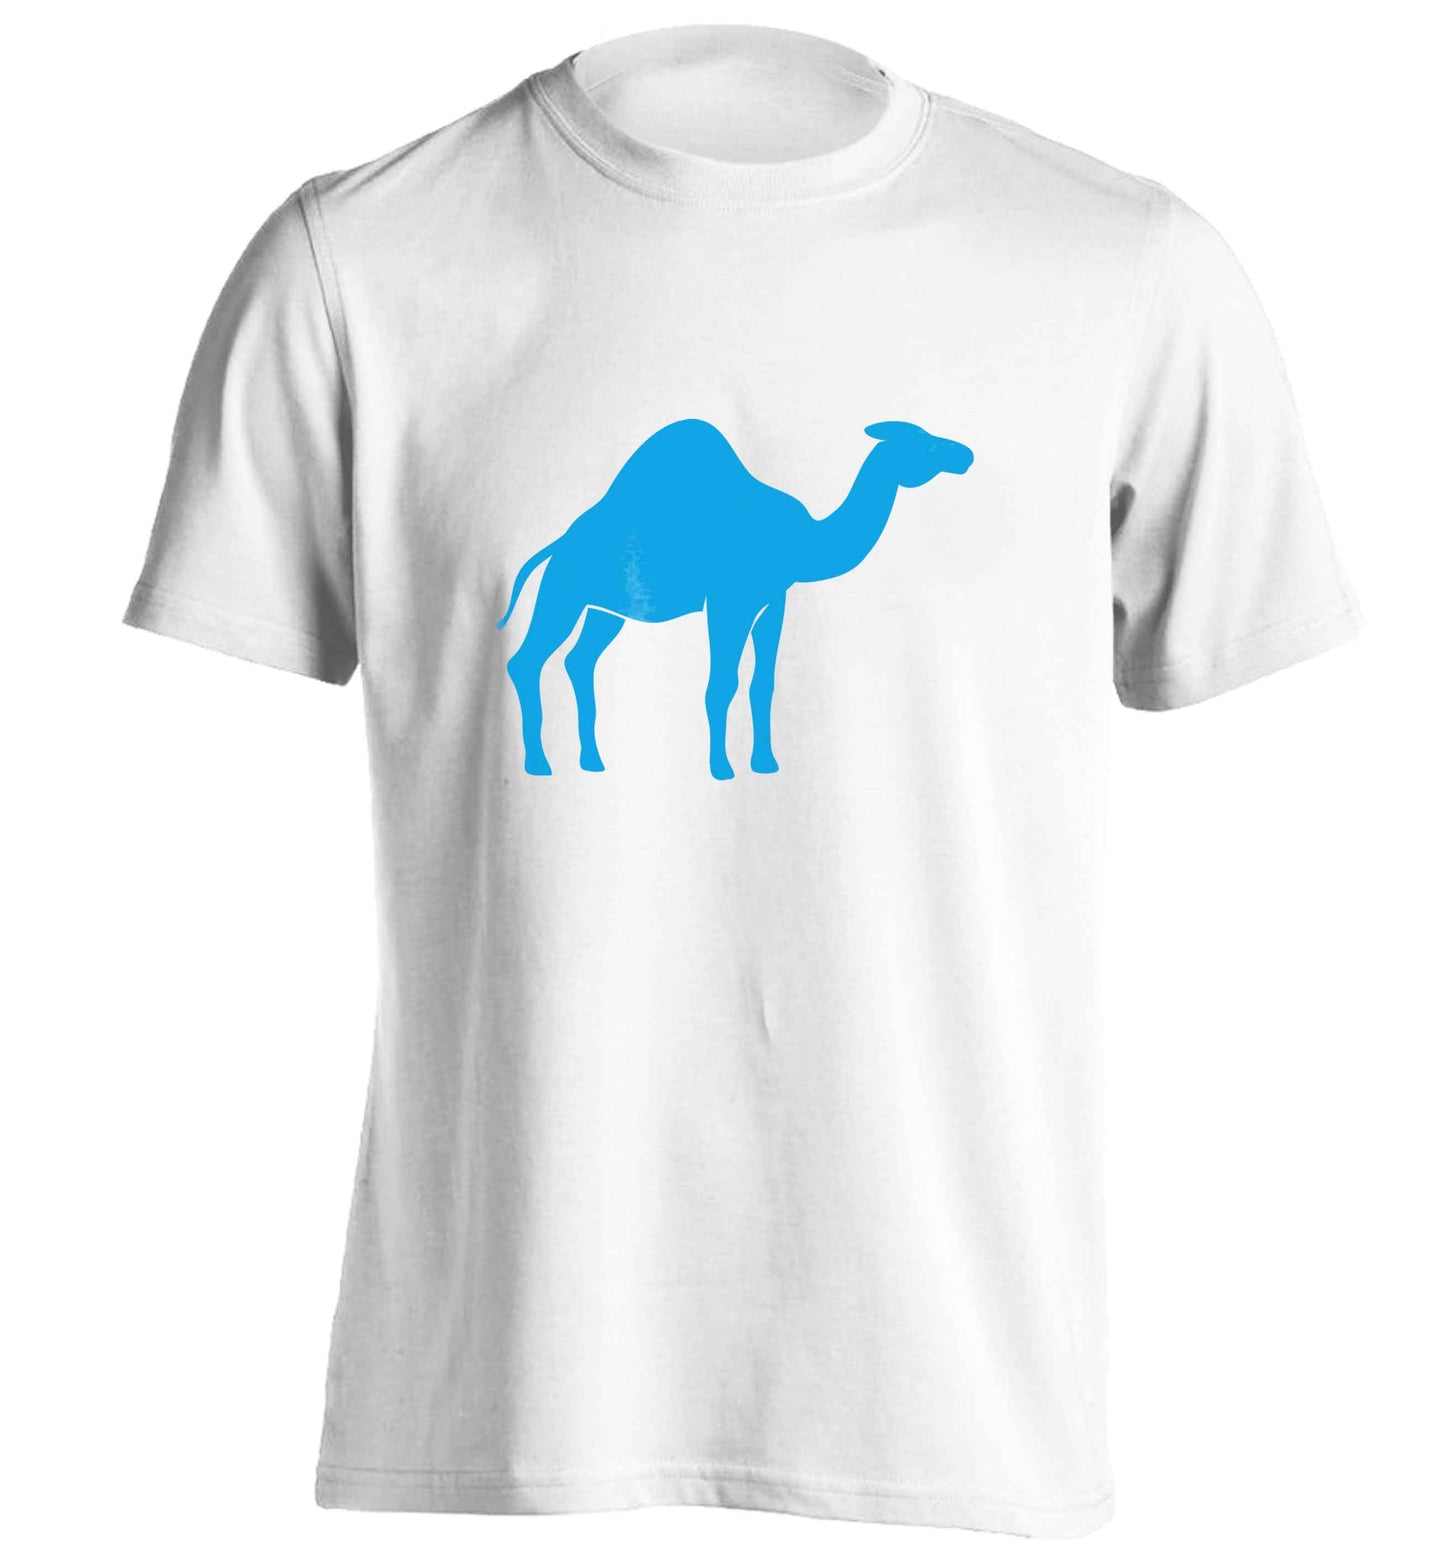 Blue camel adults unisex white Tshirt 2XL